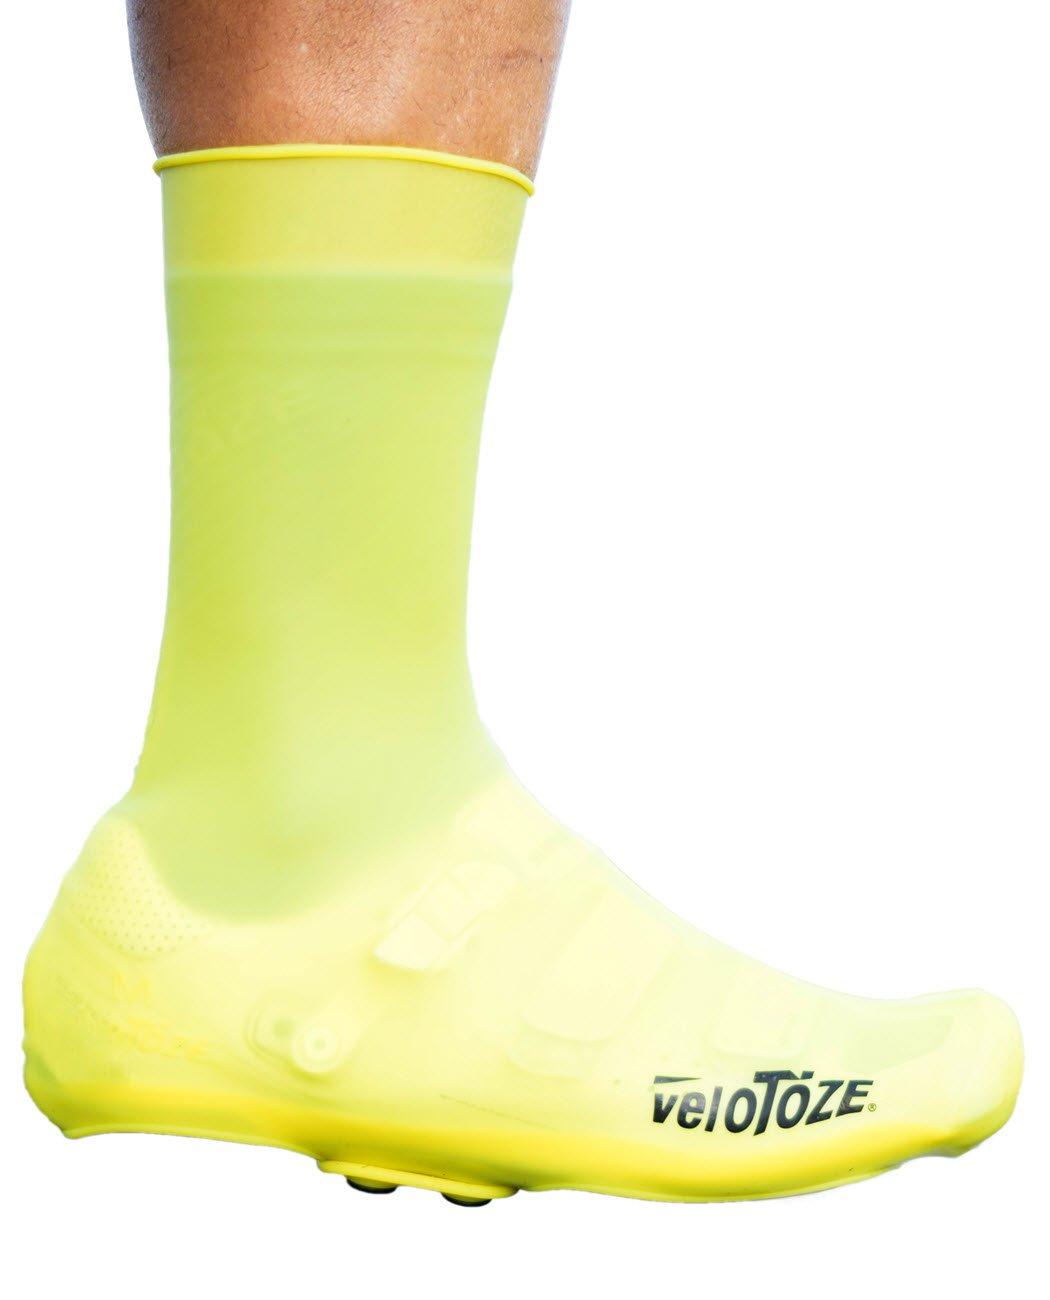 Velotoze Silicone Shoe Cover (tall) - Hi-viz Yellow